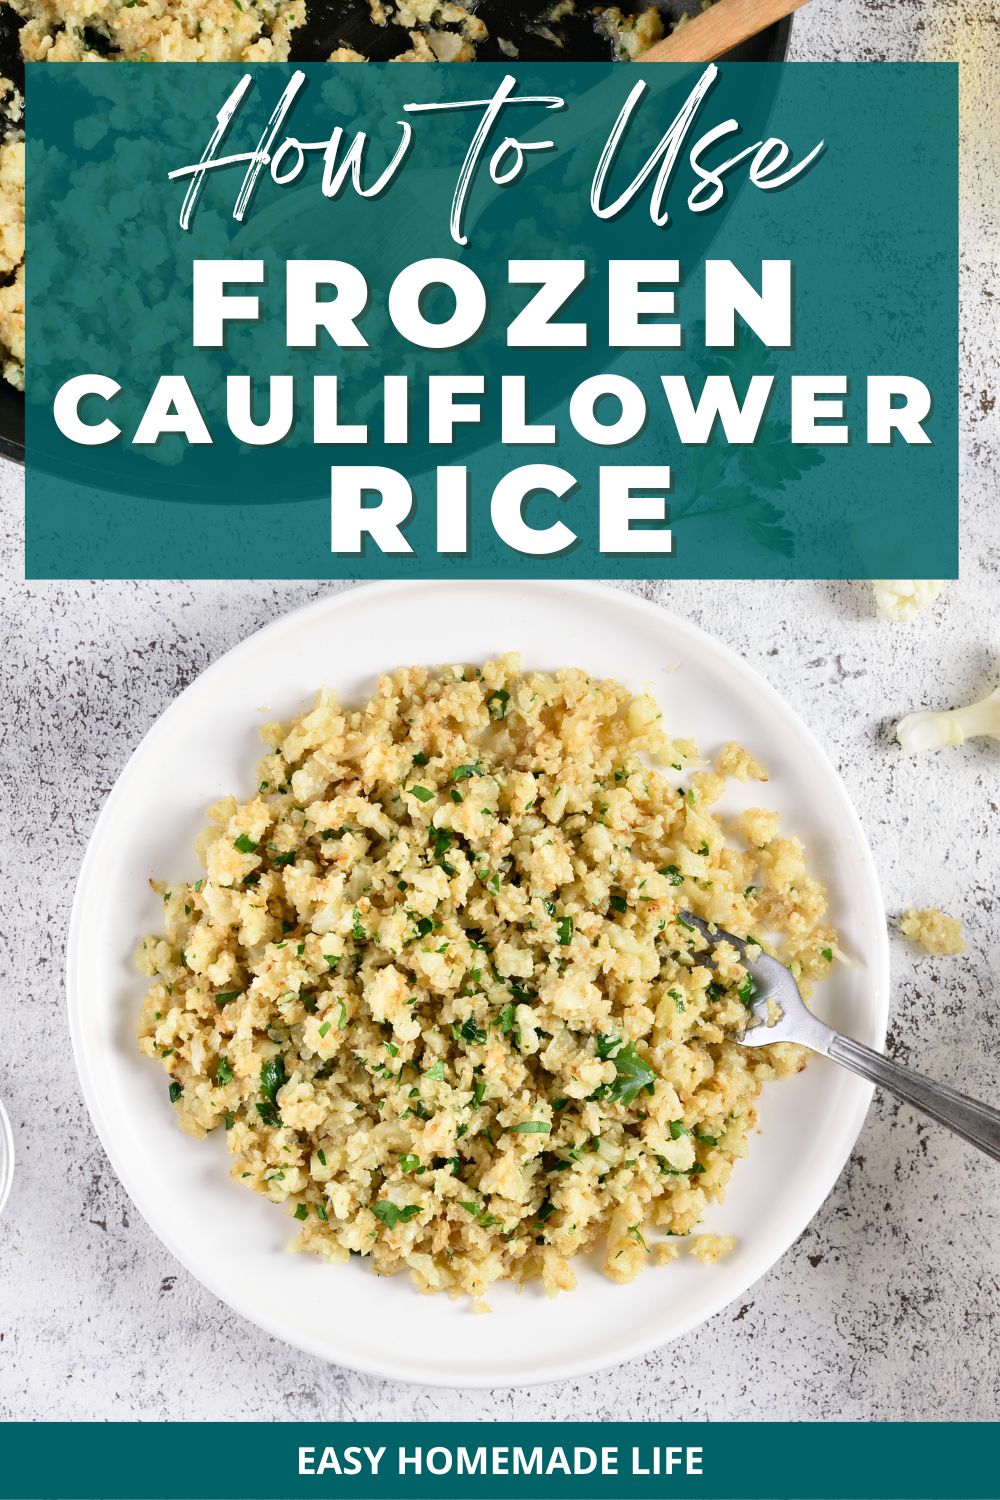 How to use frozen cauliflower rice.